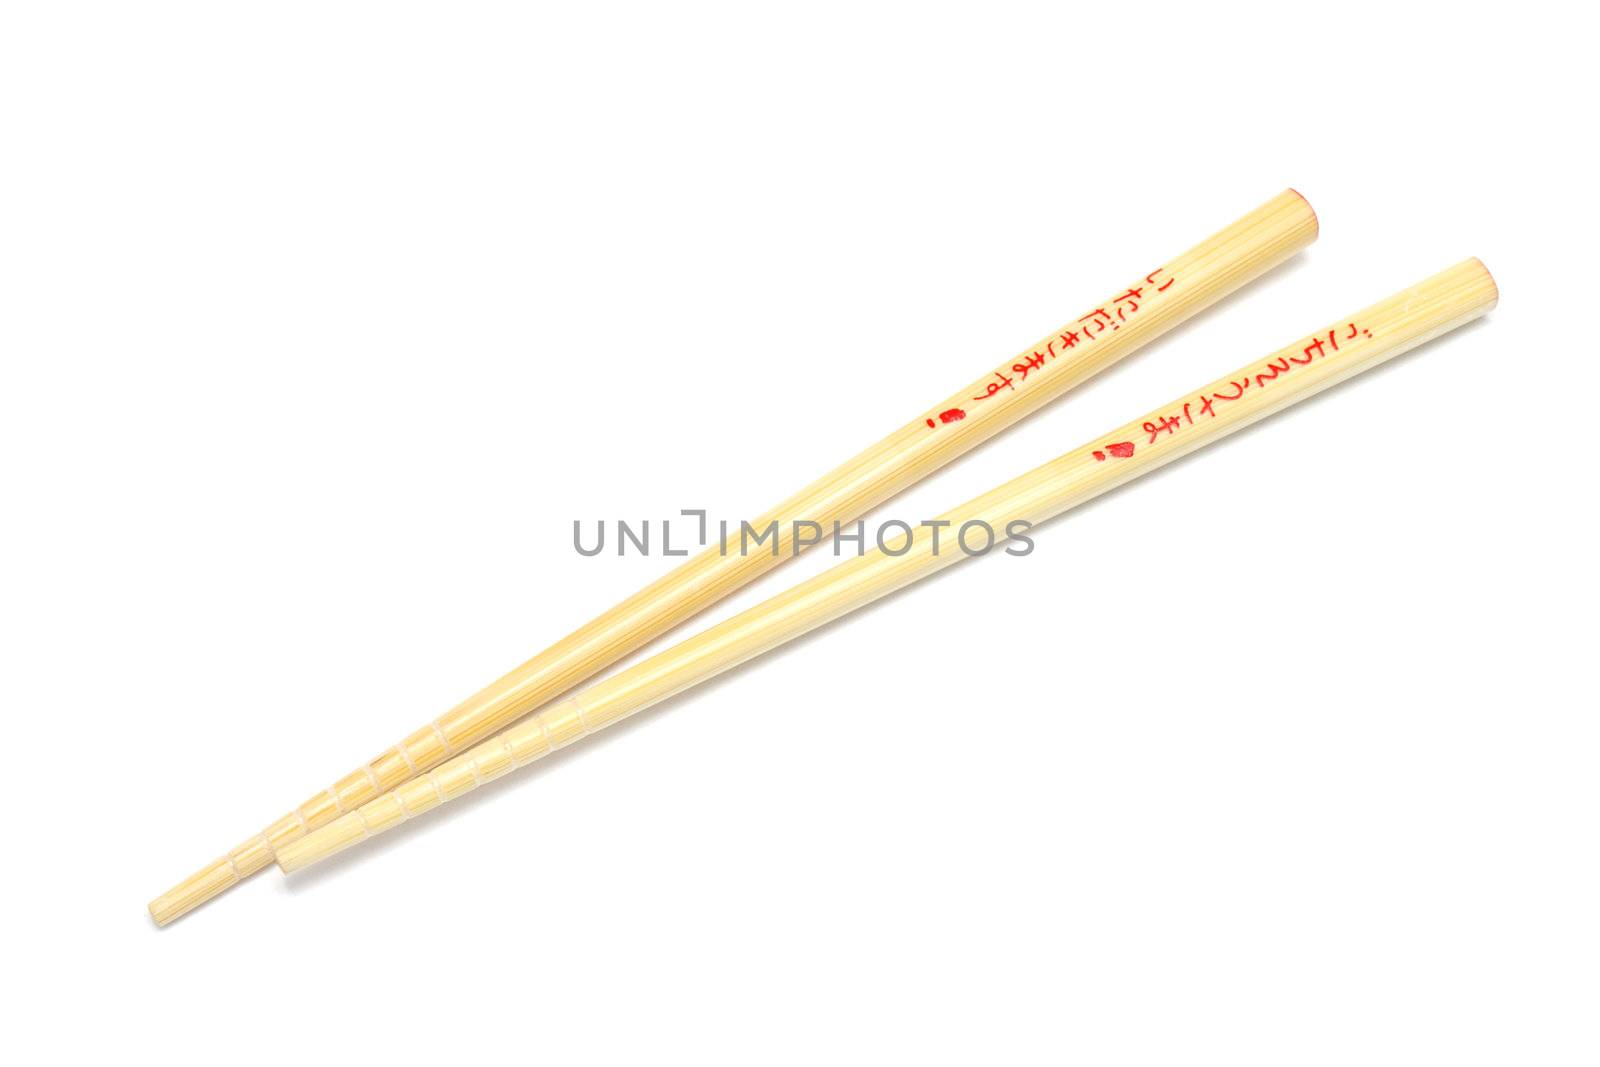 Pair of wooden chopsticks isolated on white background with words itadakimasu and gochisousama